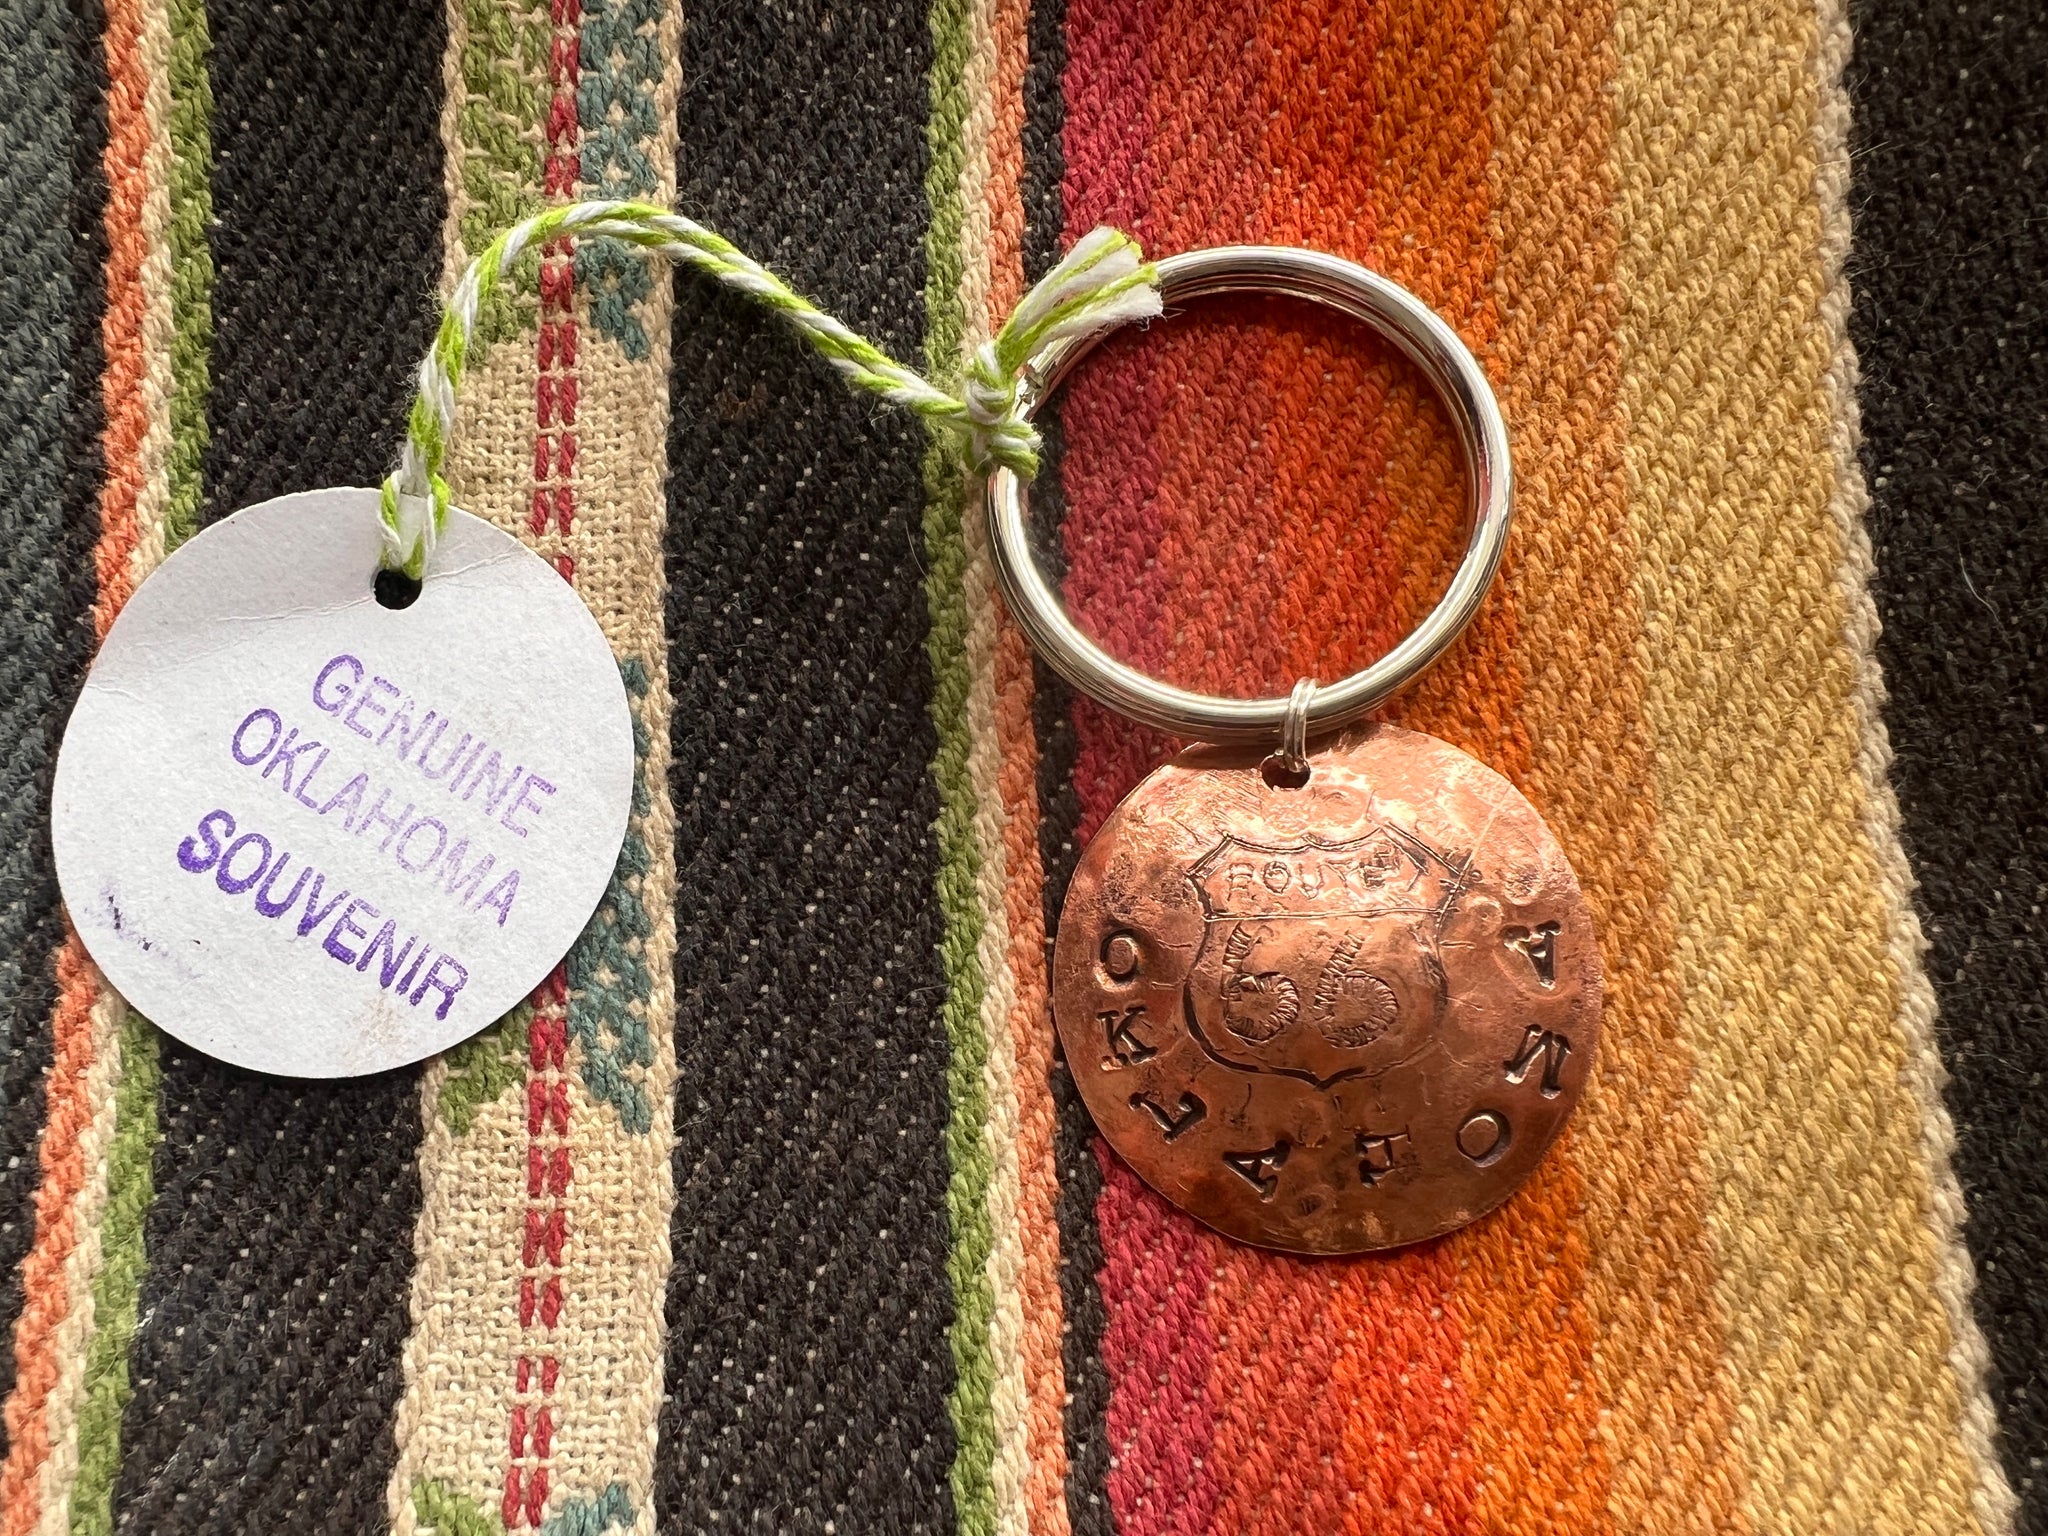 Genuine Oklahoma Souvenir Copper Key Rings & Good Luck Charms